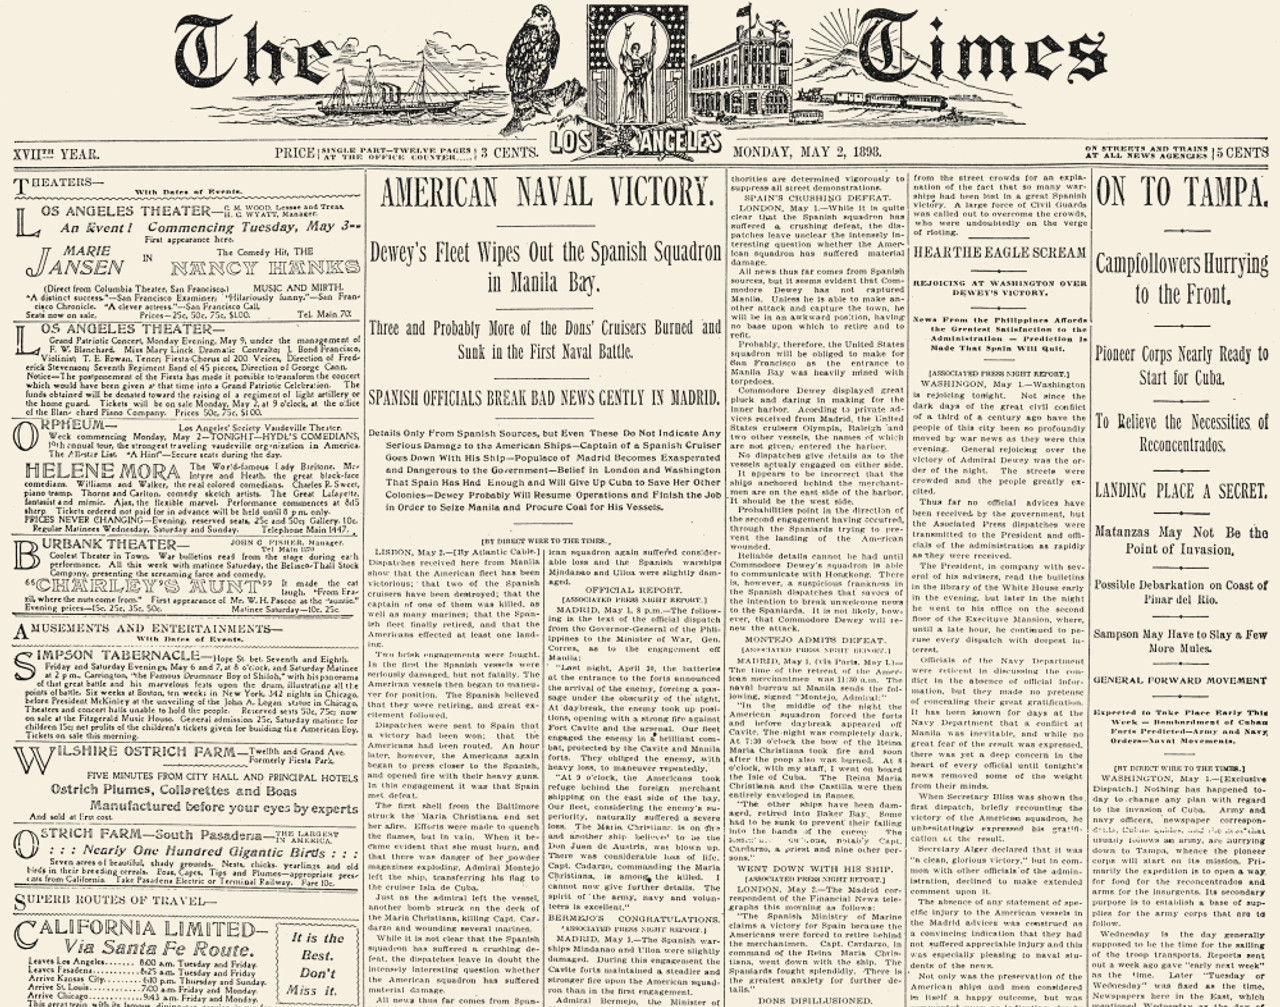 Old News: This Week in 1898